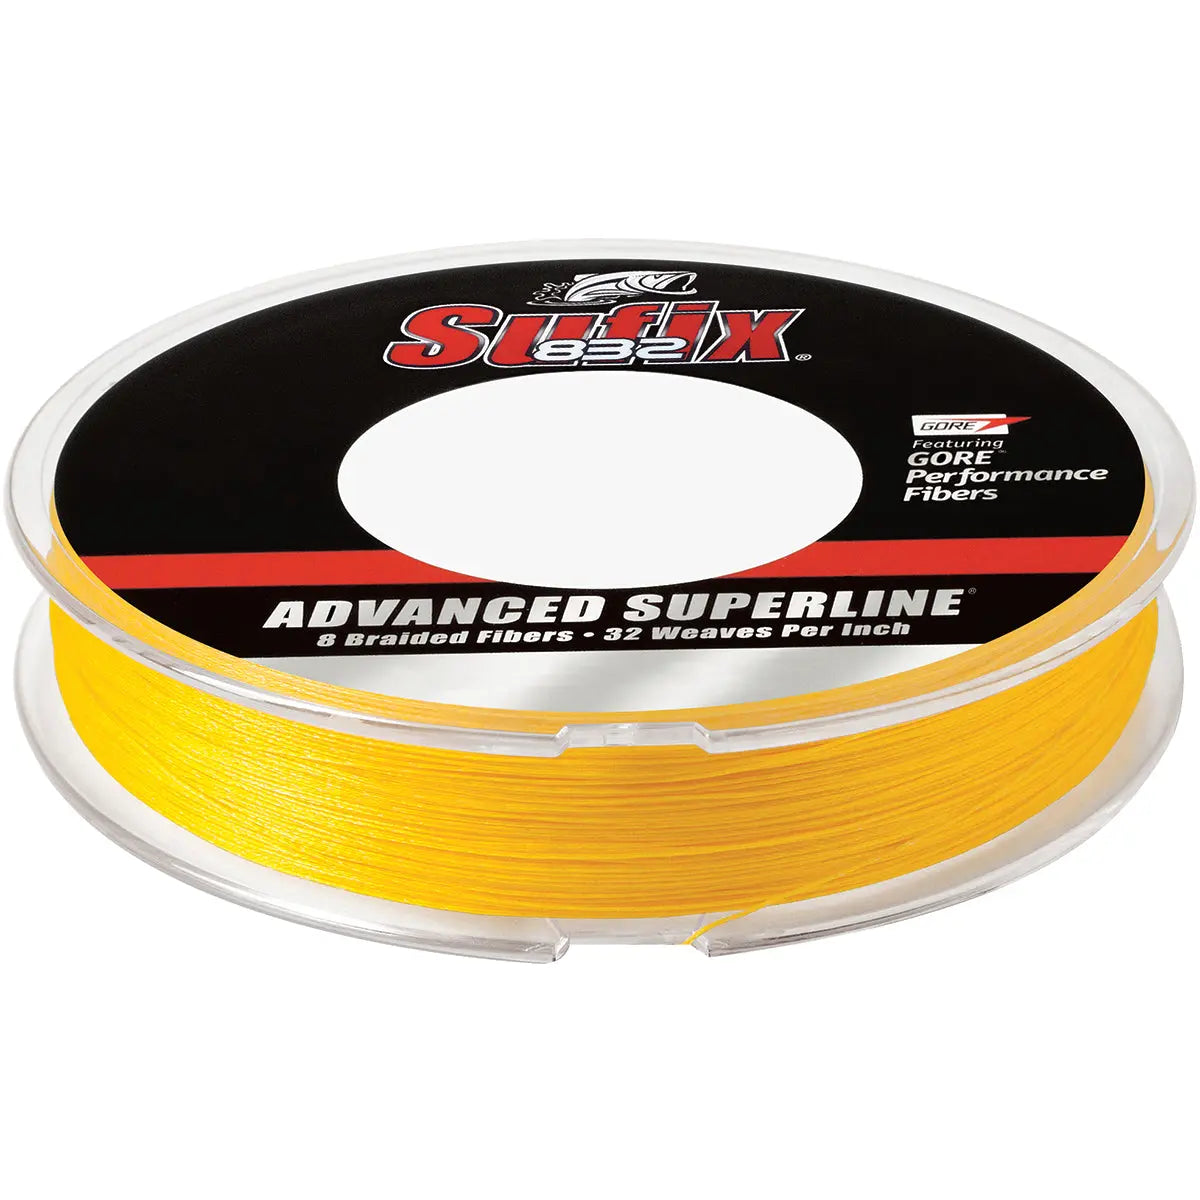 Sufix 150 Yard 832 Advanced Superline Braid Fishing Line - 30 lb. - Hi-Vis Yellow Sufix